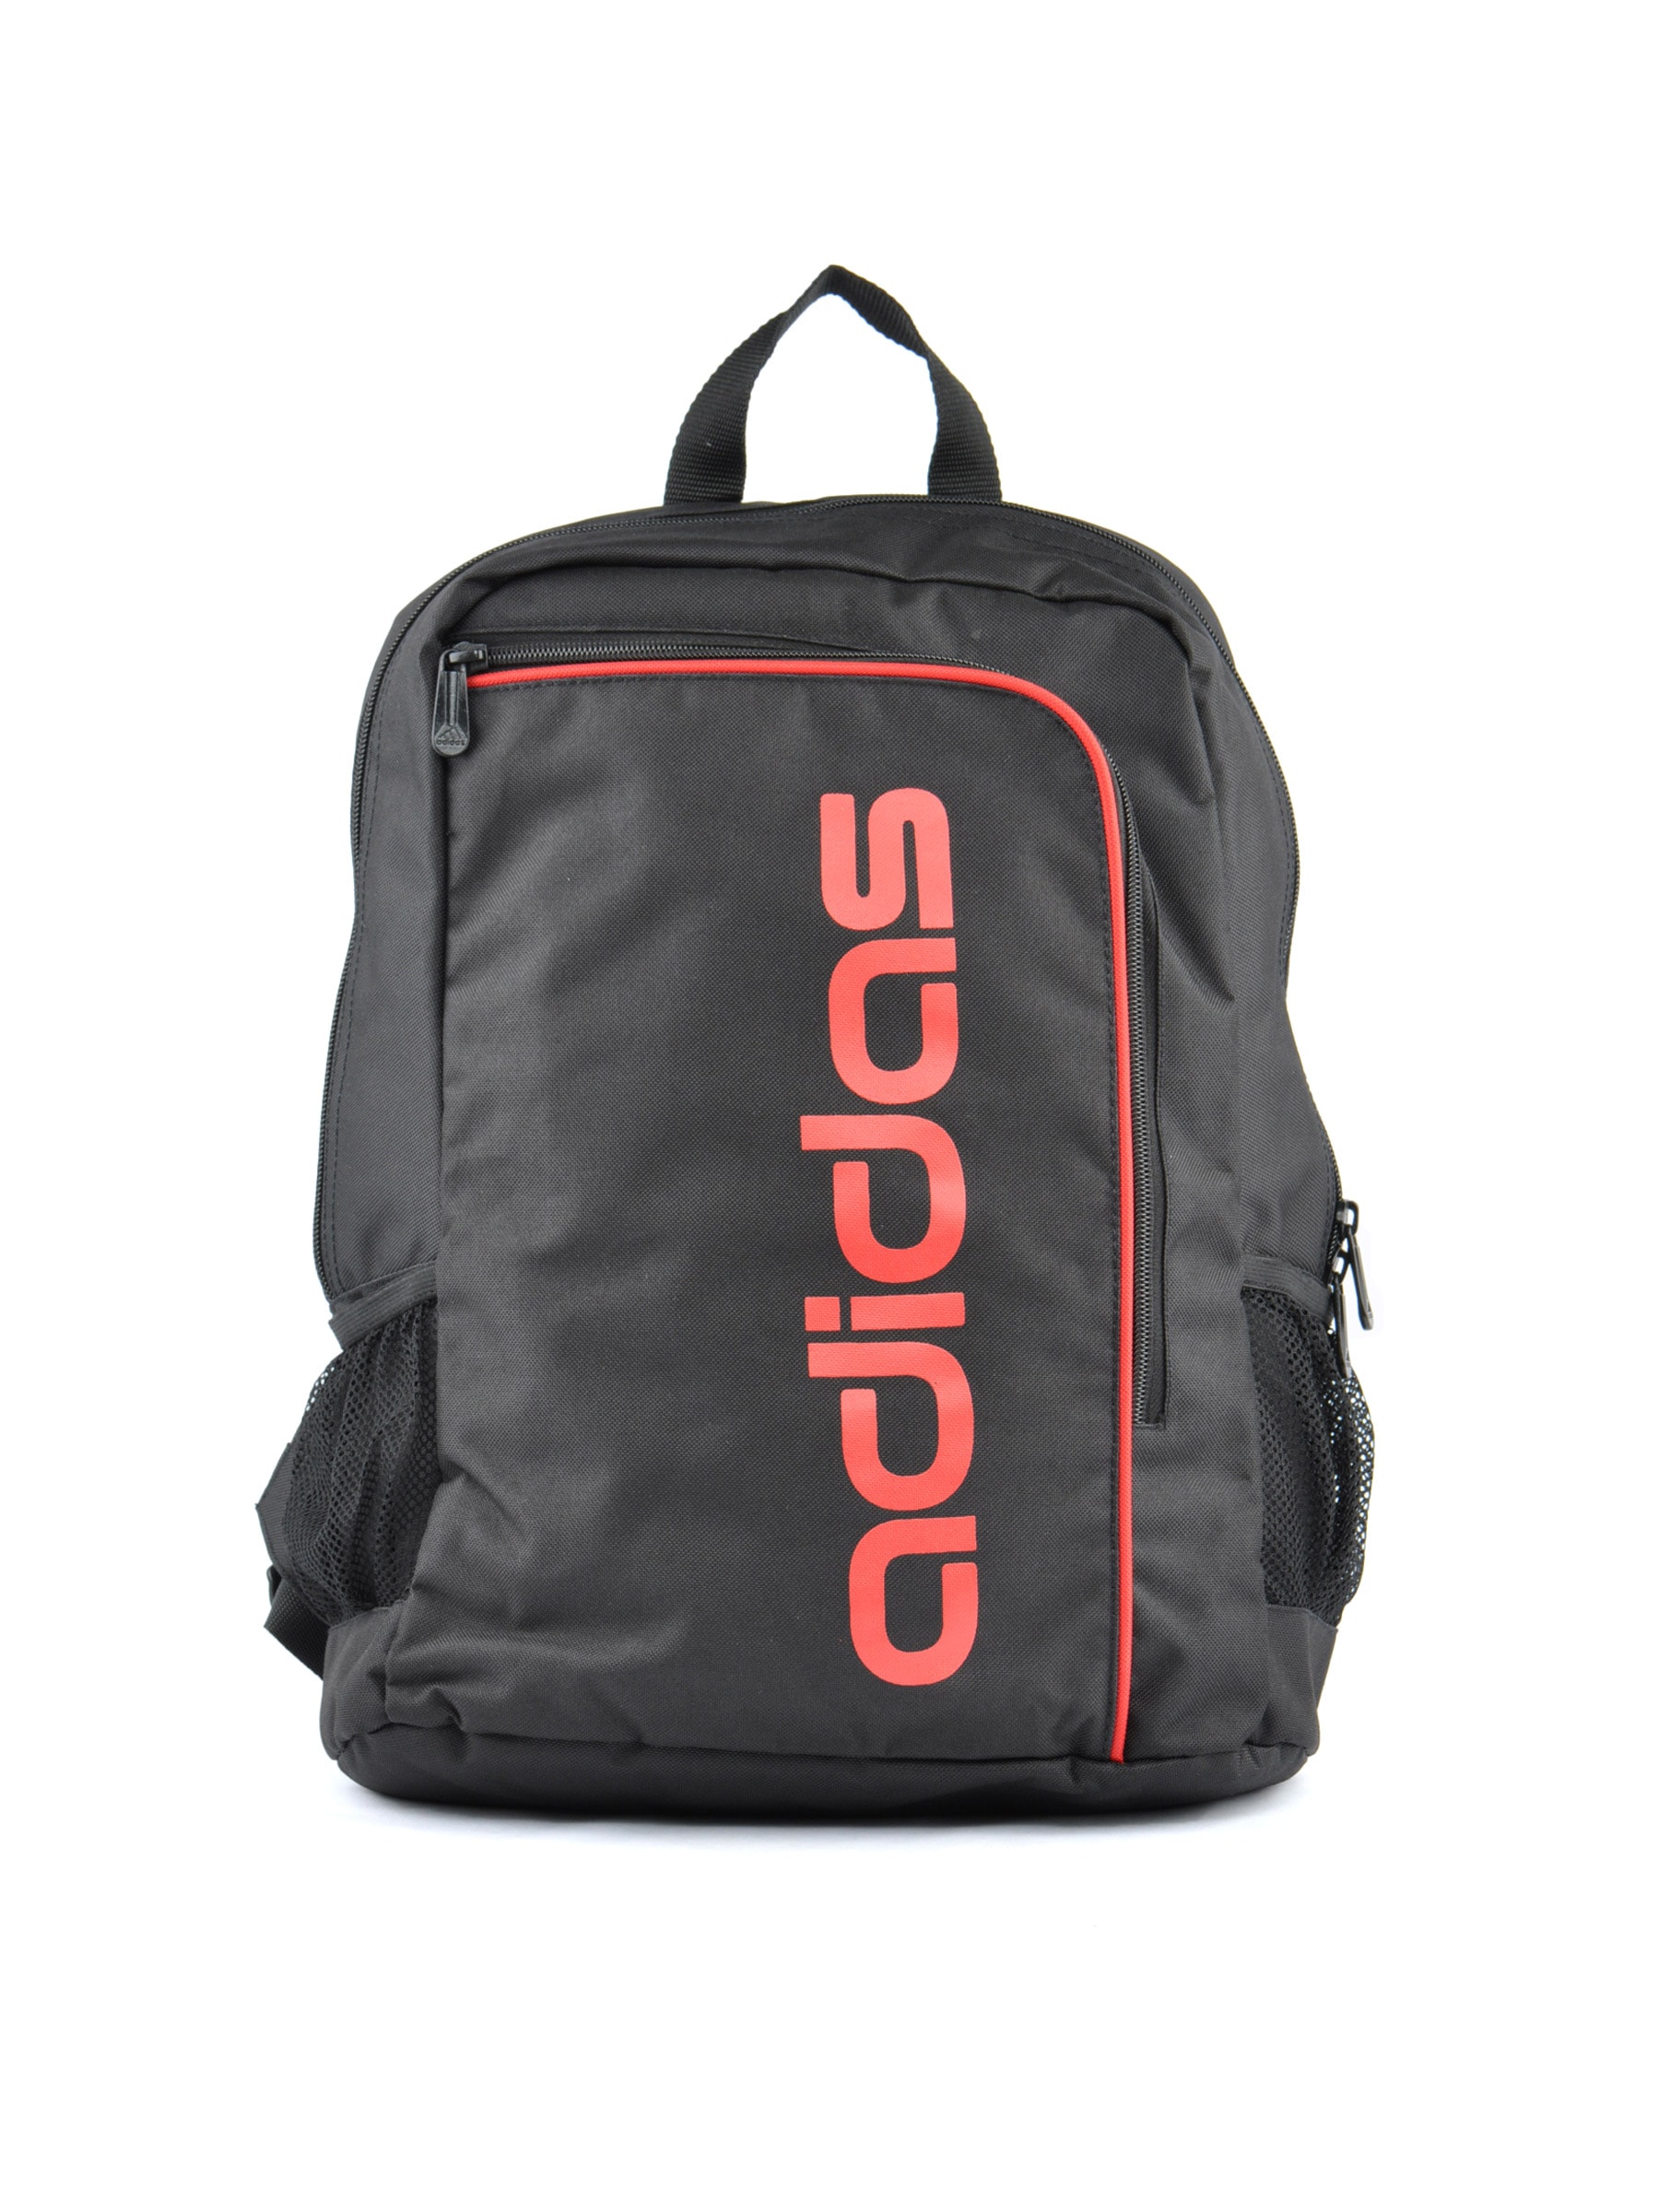 ADIDAS Unisex ADP1810 Black Backpack